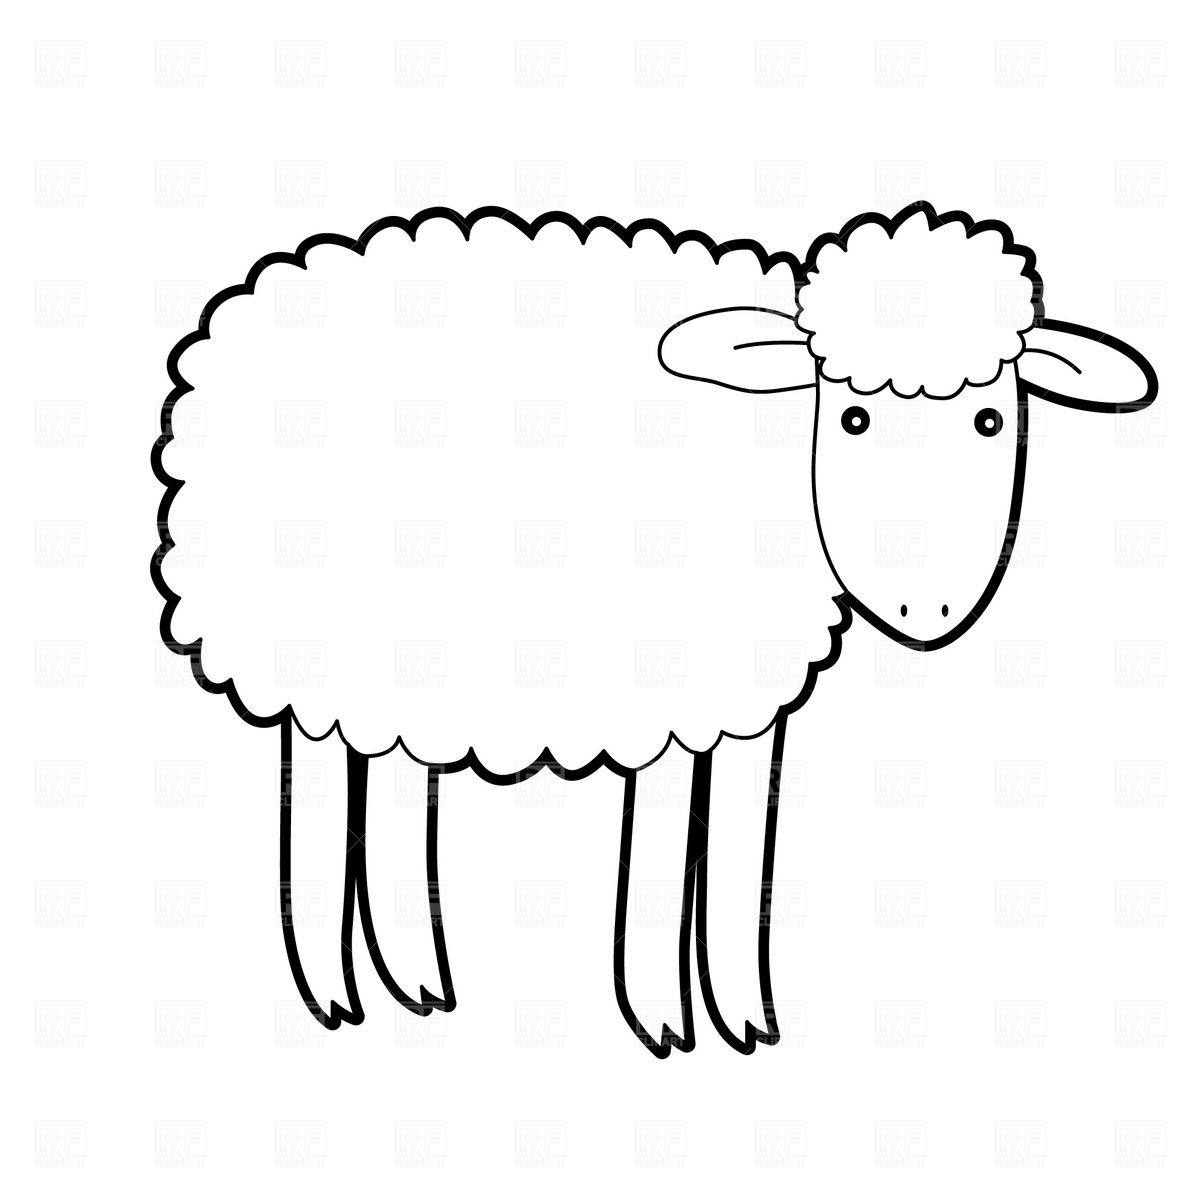 Cartoon Sheep Download Royalty Free Vector Clipart  Eps